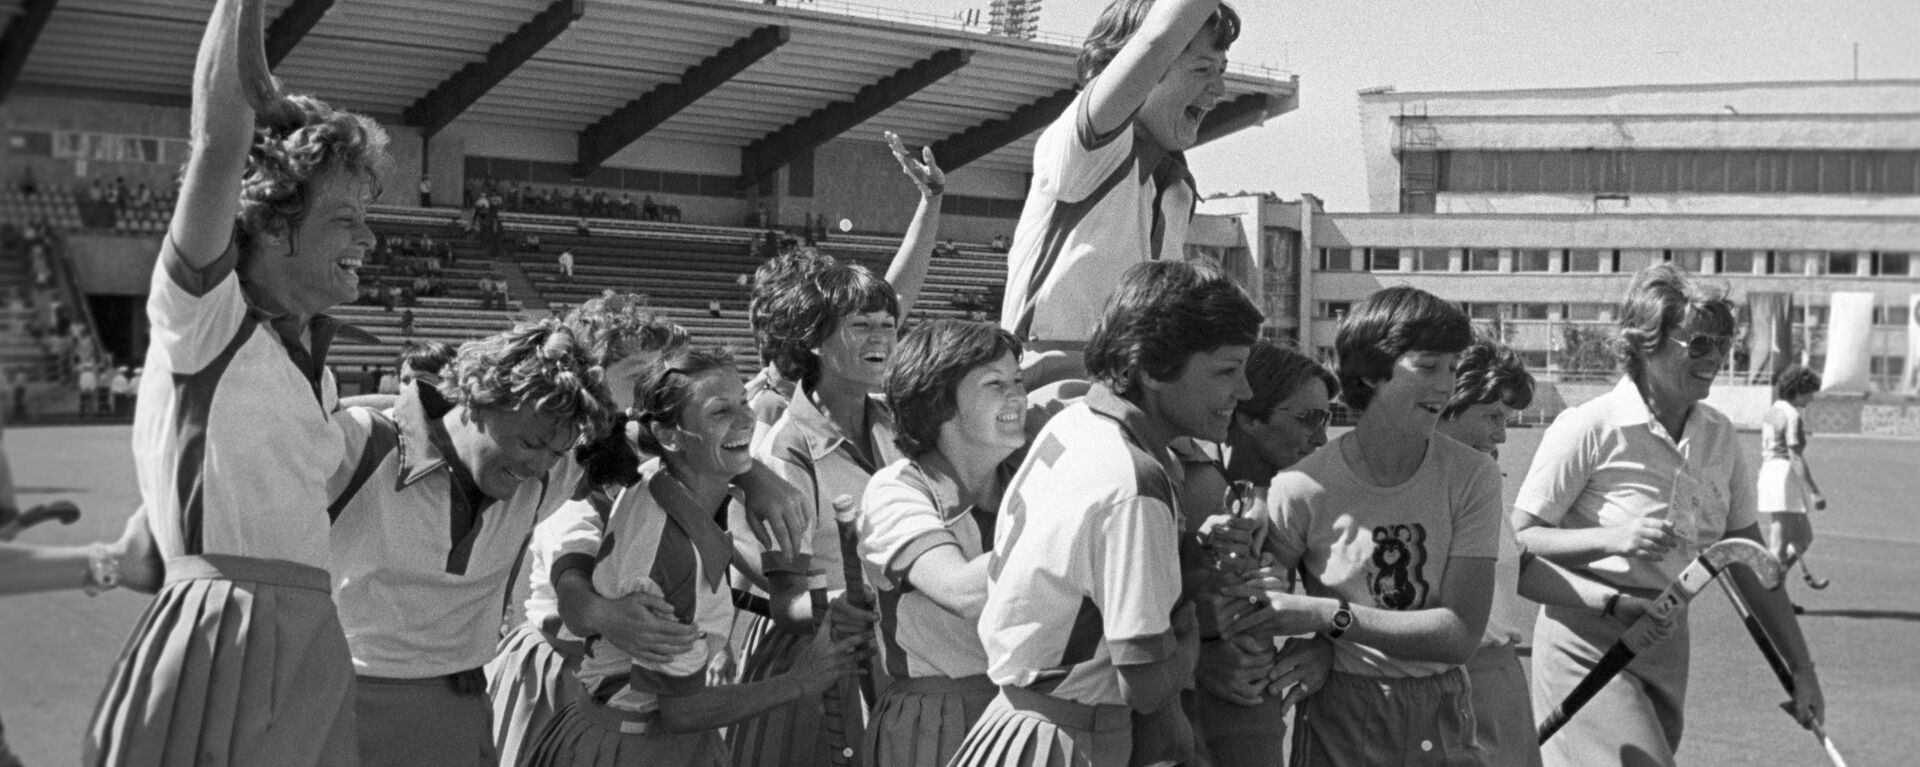 Đội hockey nữ của Zimbabwe, 1980 - Sputnik Việt Nam, 1920, 30.07.2020